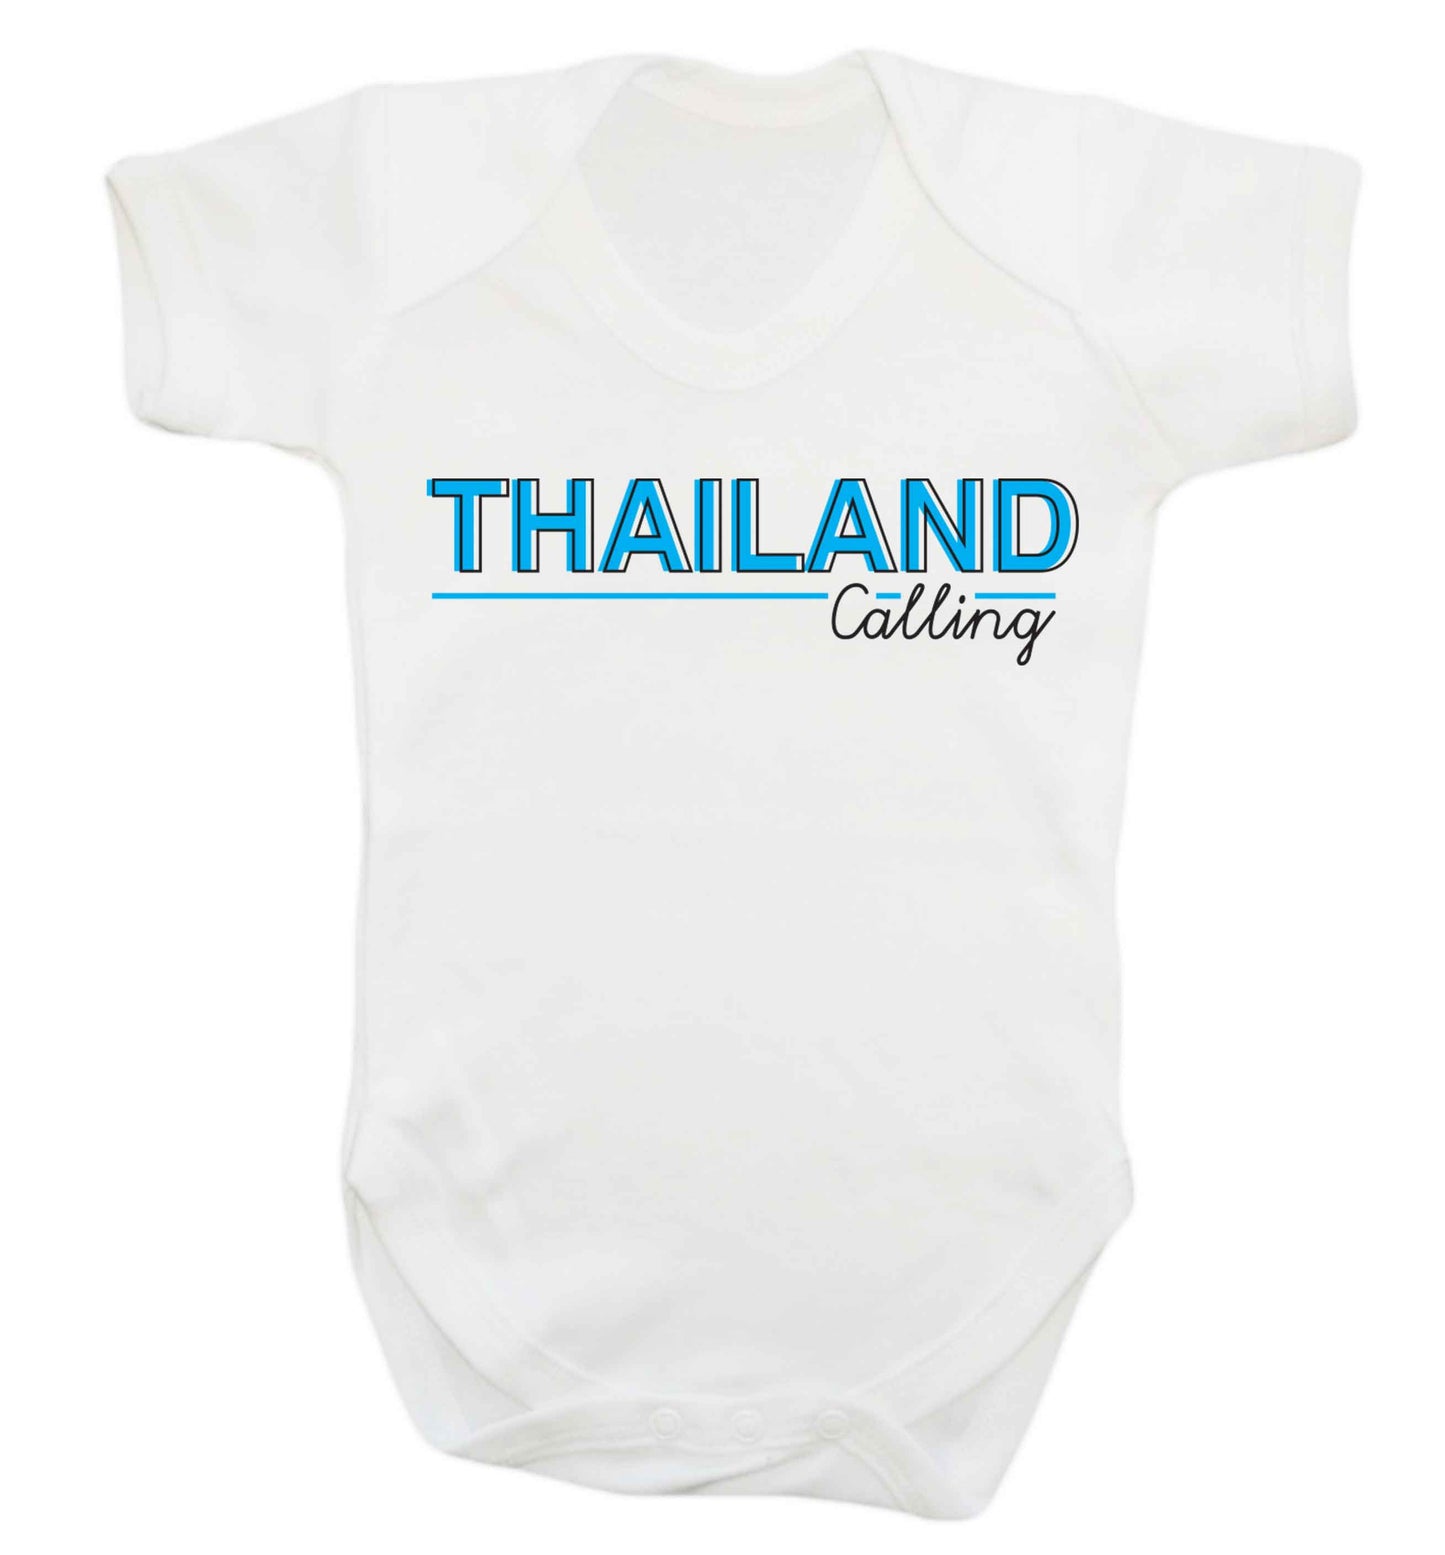 Thailand calling Baby Vest white 18-24 months